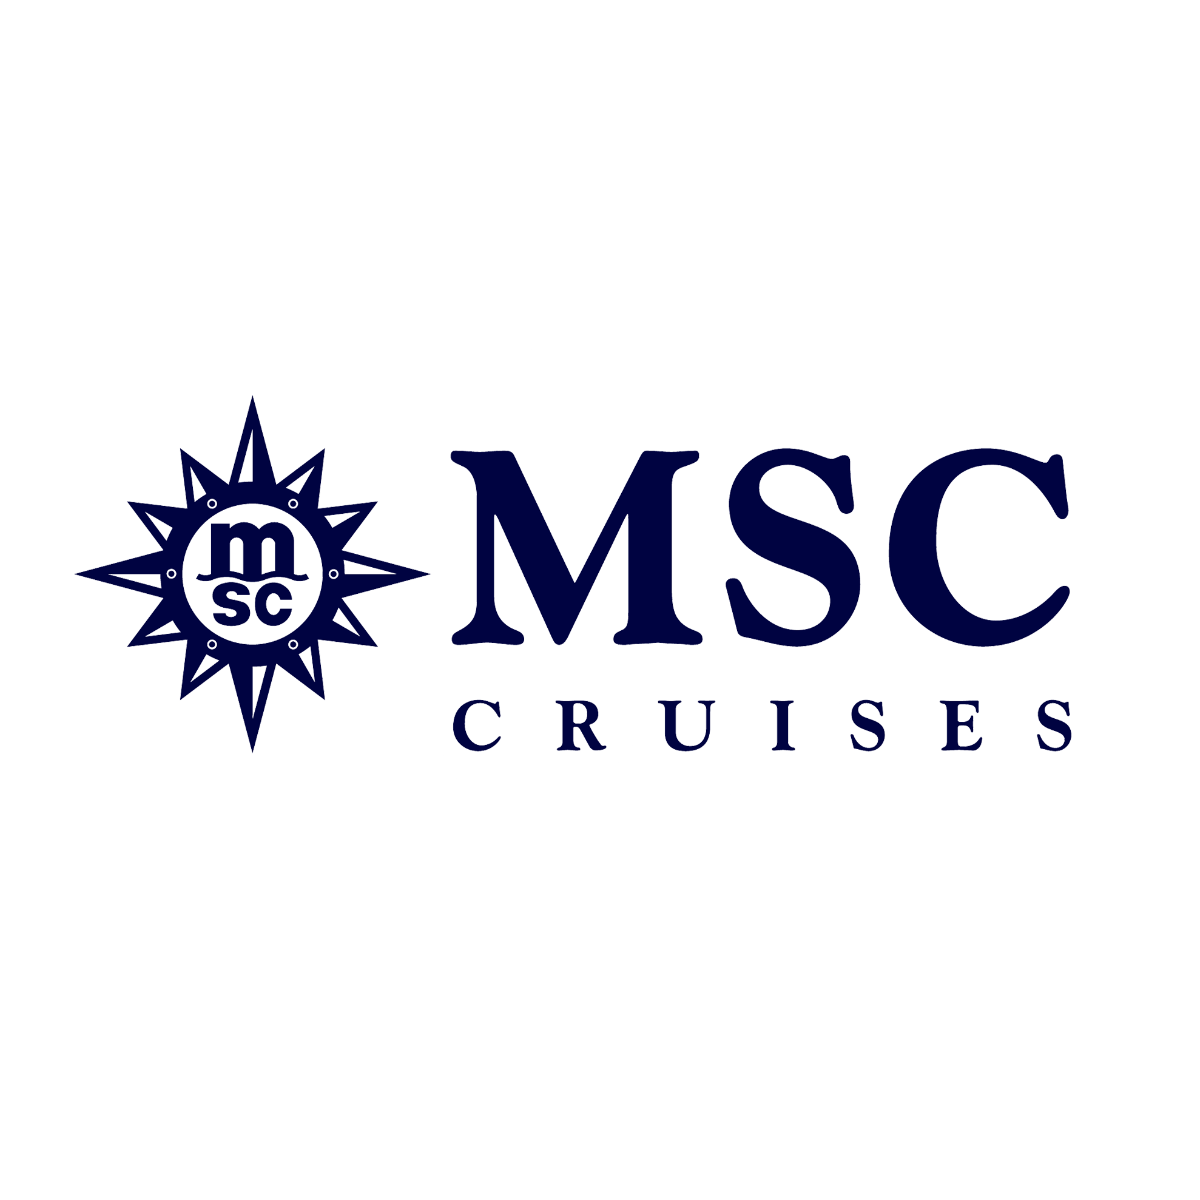 msc cruises logo